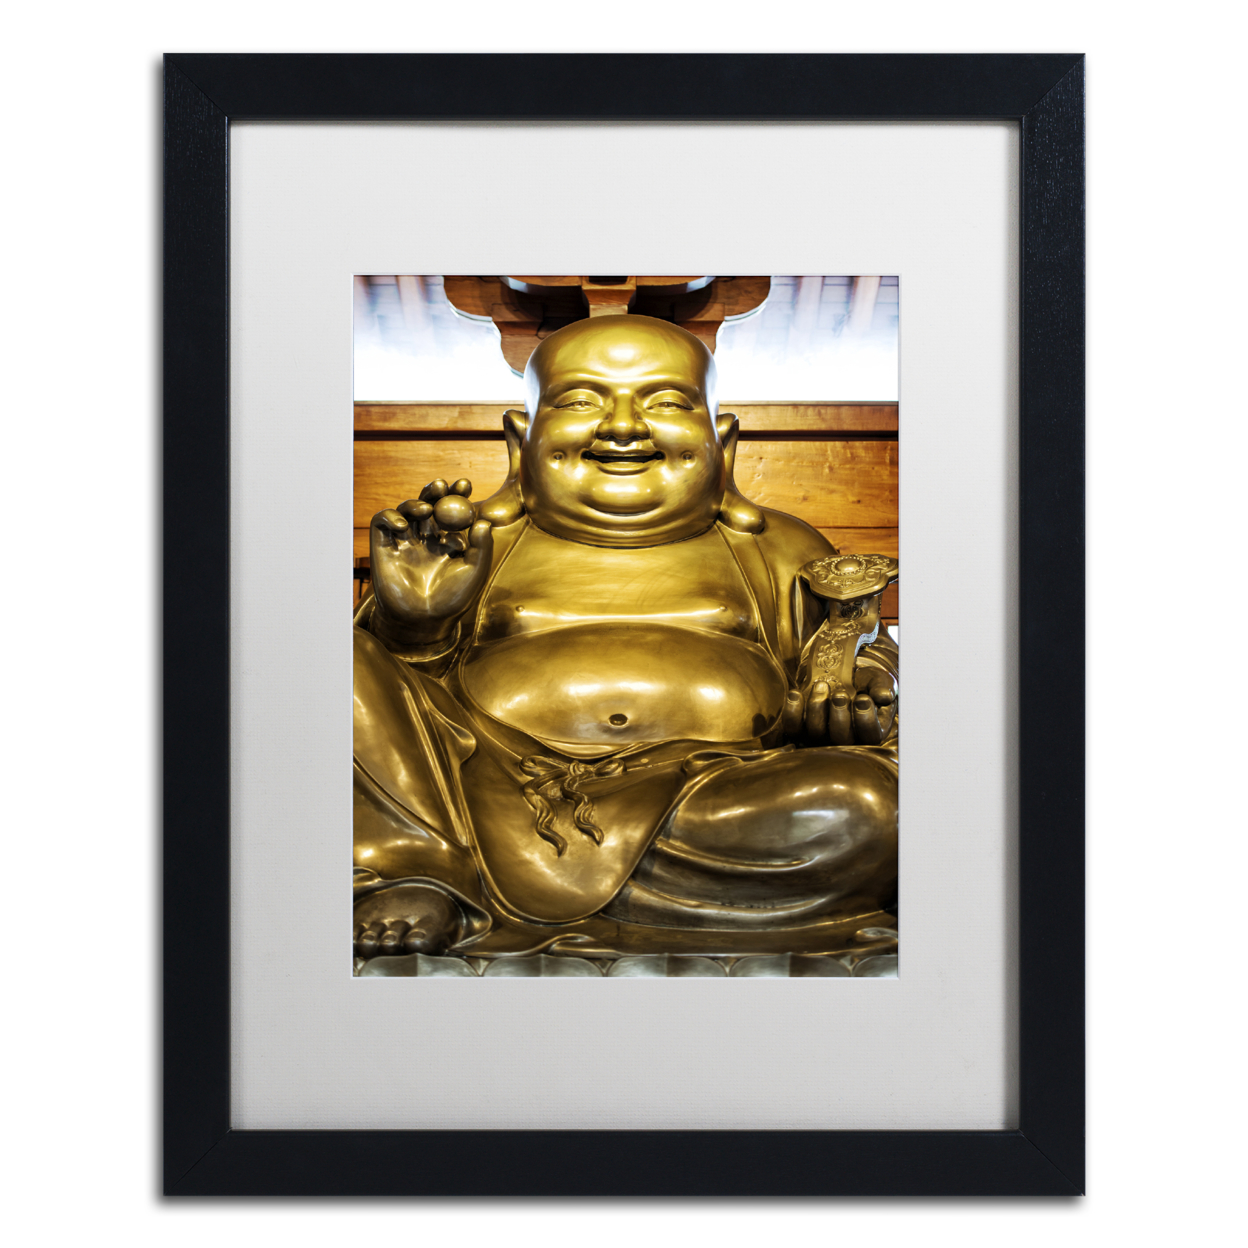 Philippe Hugonnard 'Gold Buddha' Black Wooden Framed Art 18 X 22 Inches